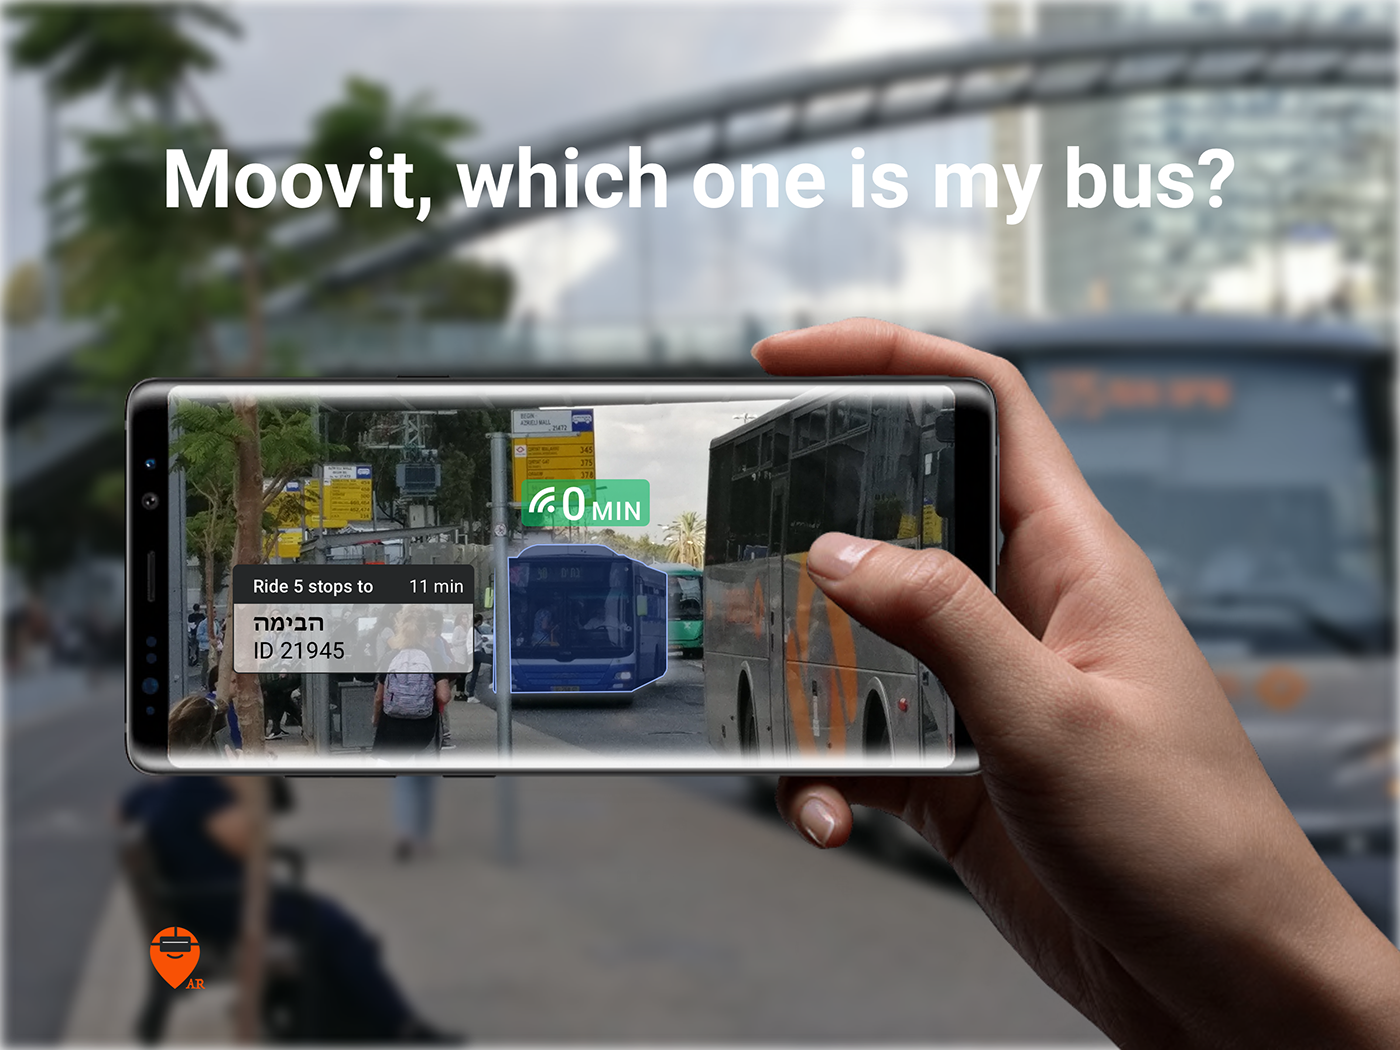 public transport Travel augmented reality bus UI/UX AR Mobile moovit schedule ETA navigation